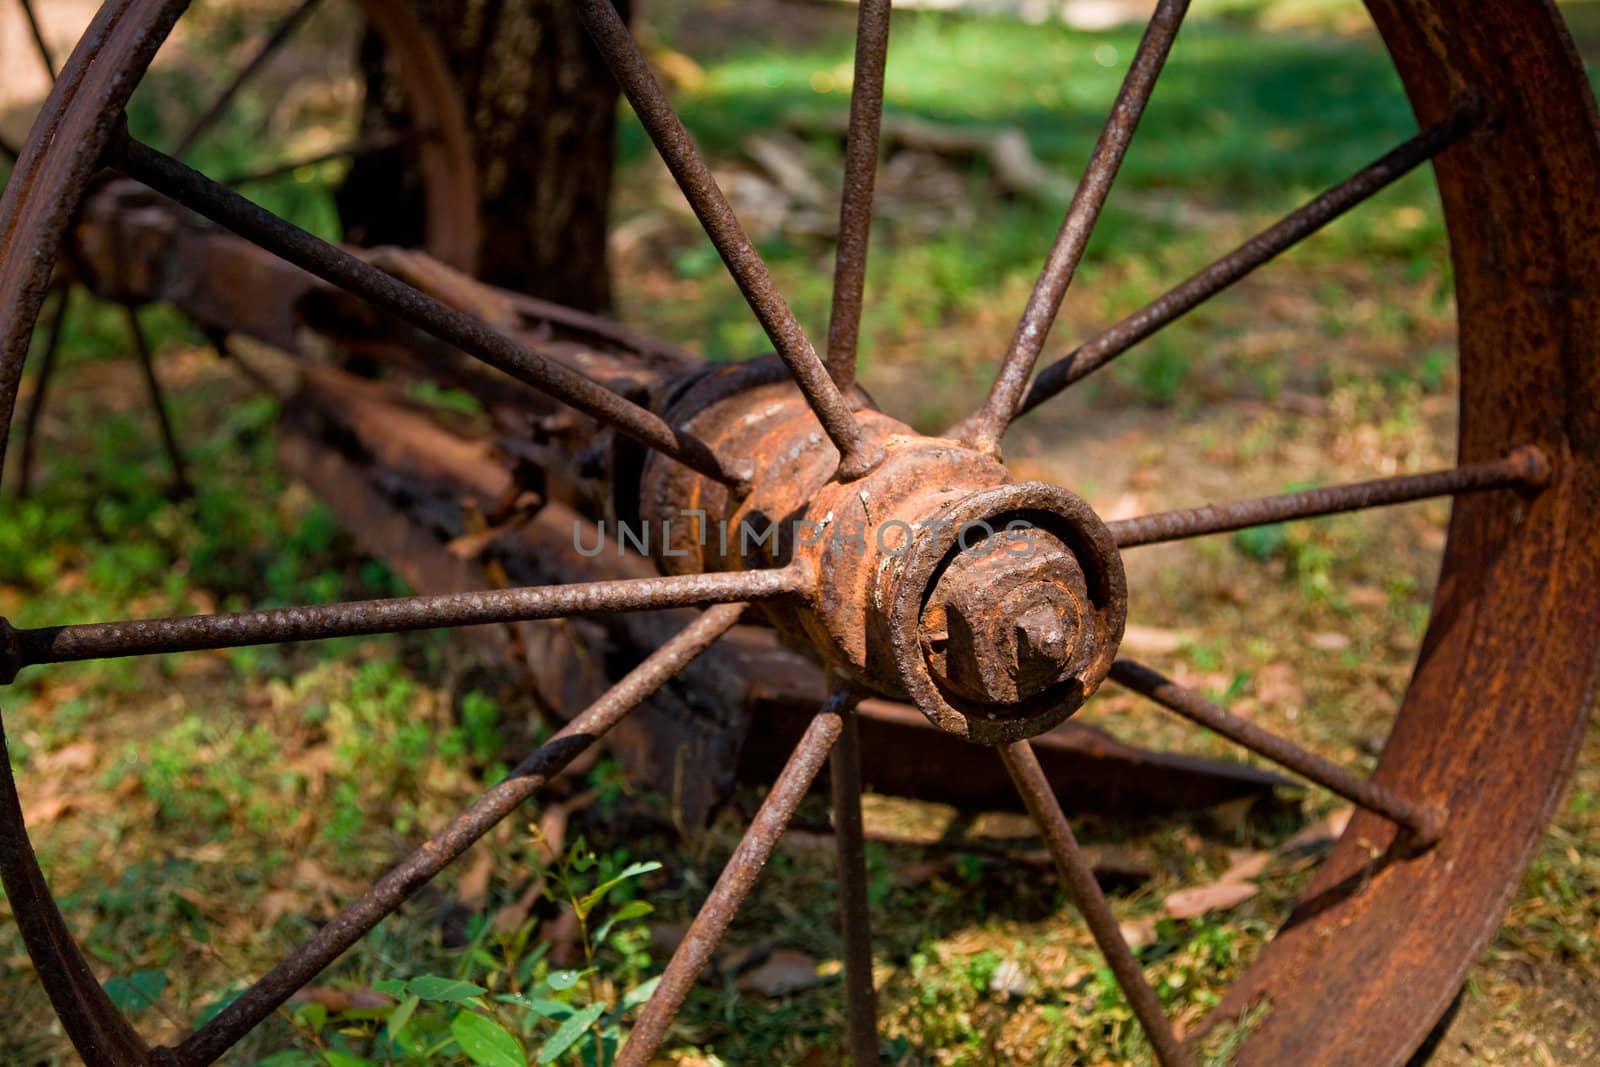 A rusty old wagon wheel
